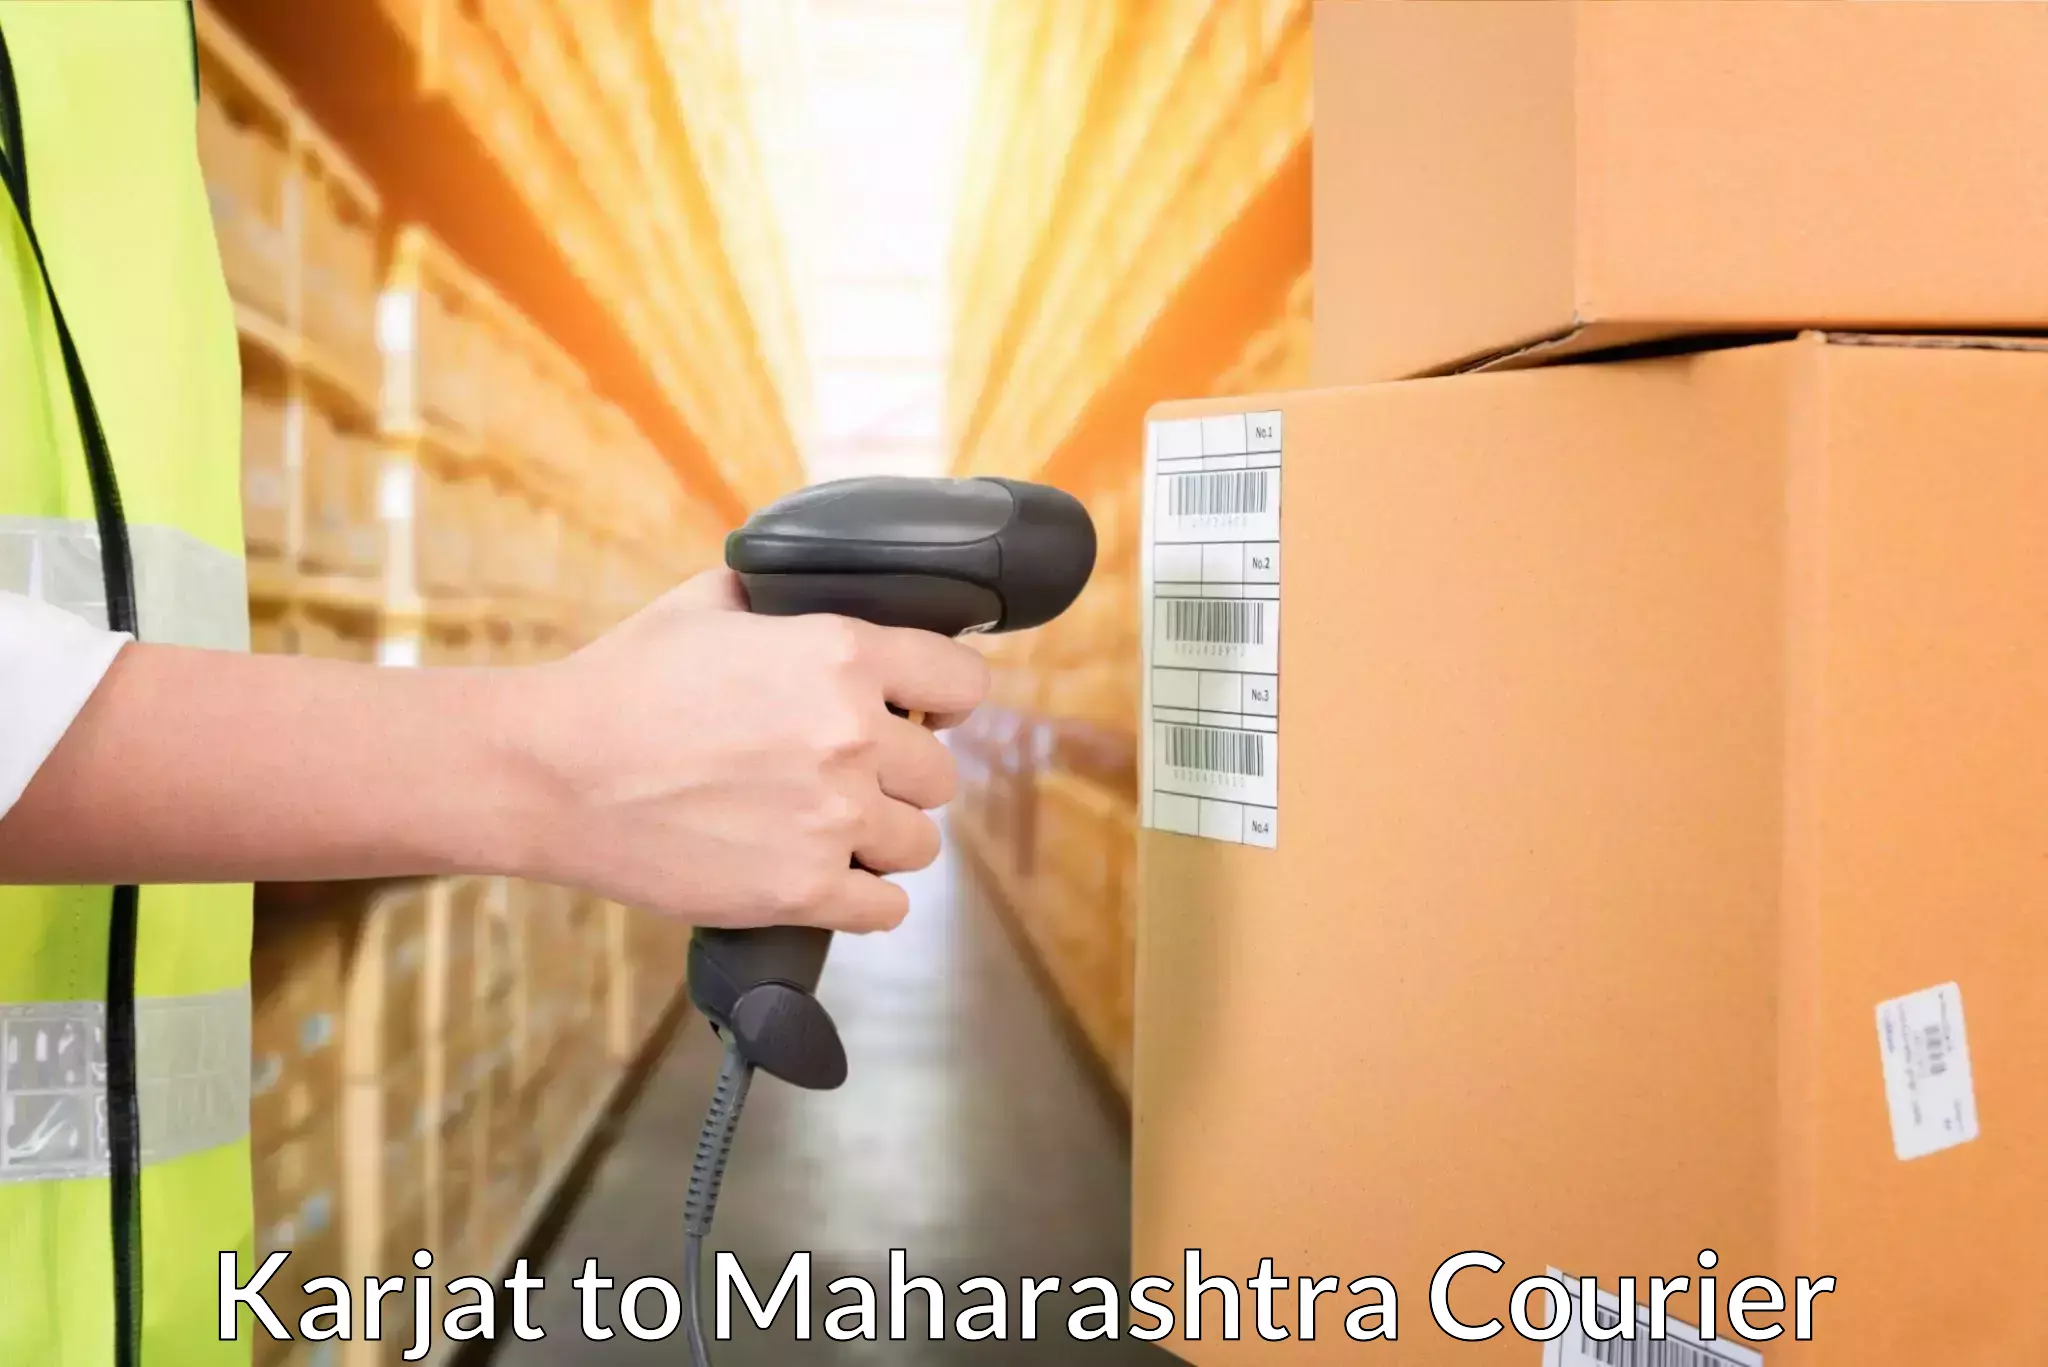 Courier service partnerships Karjat to Nandurbar